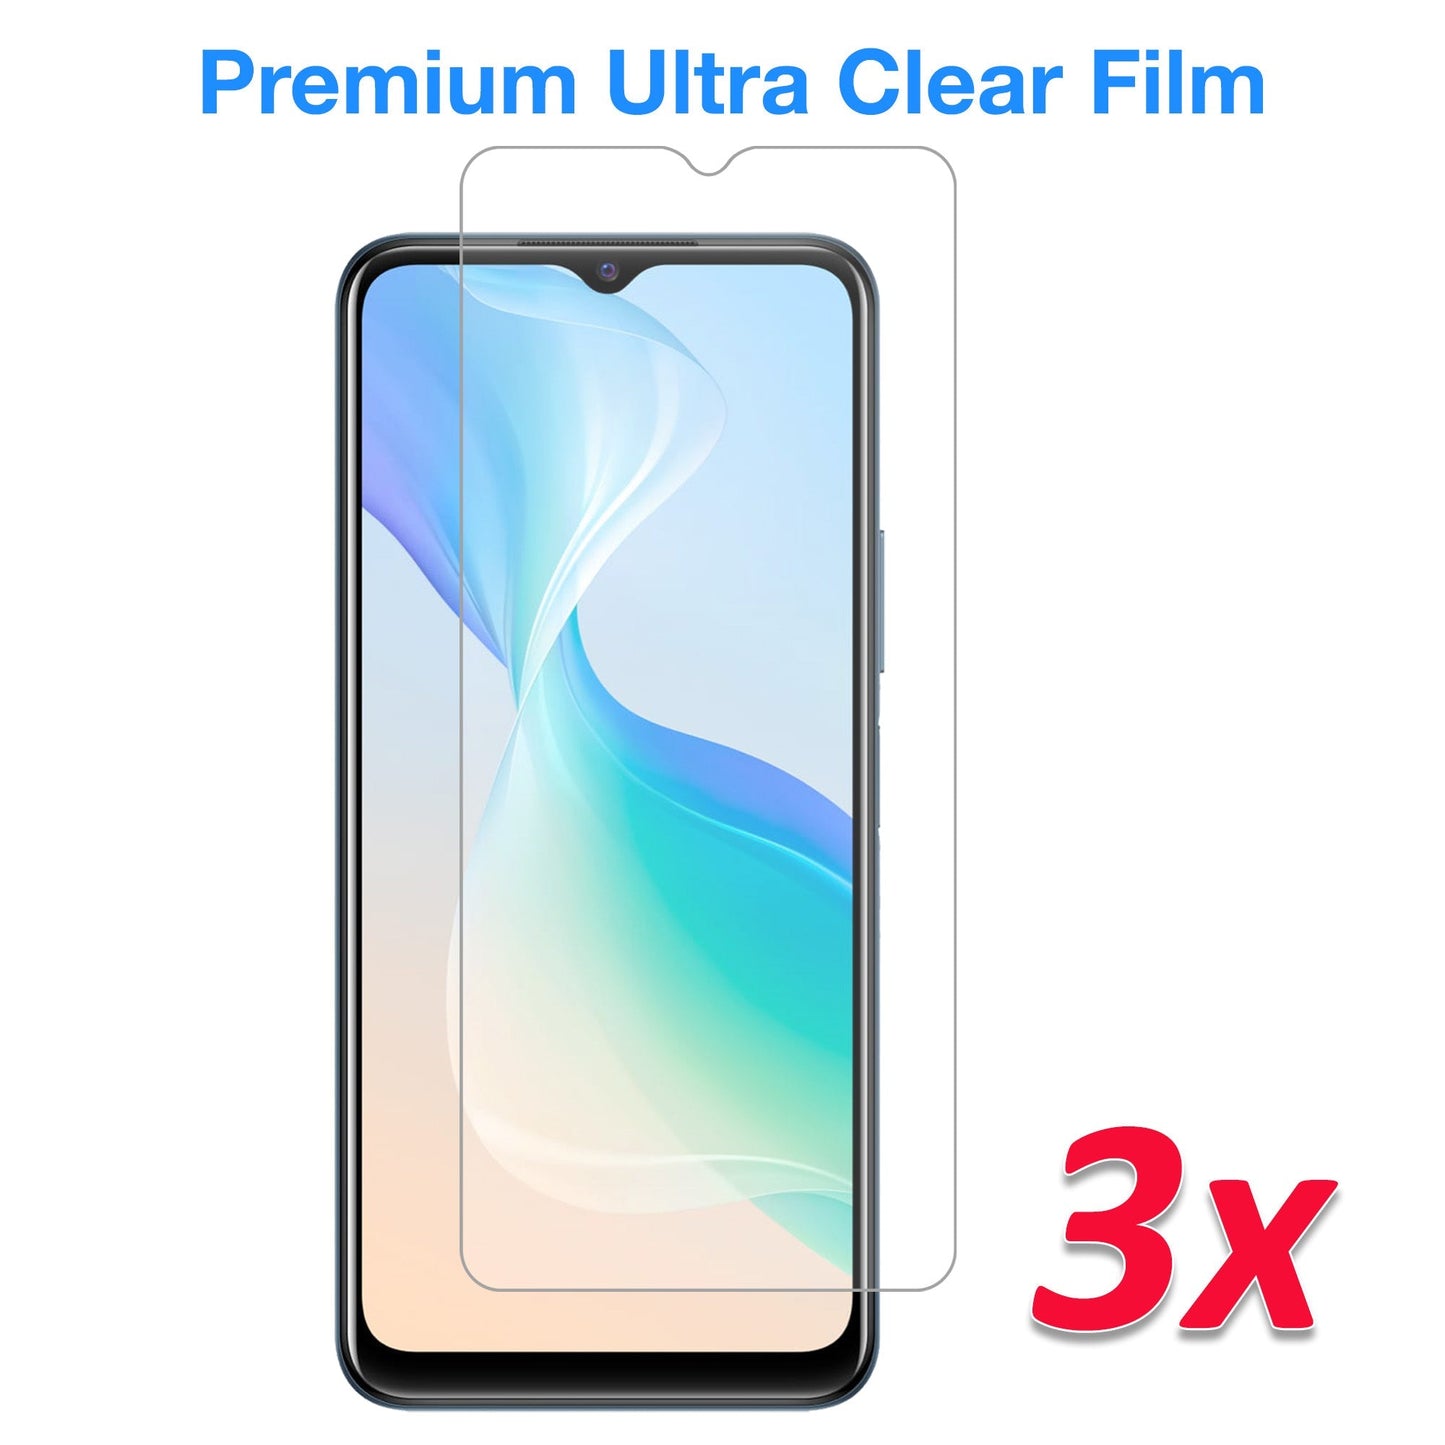 [3 Pack] MEZON Vivo Y01 Ultra Clear Screen Protector Case Friendly Film (Vivo Y01, Clear)